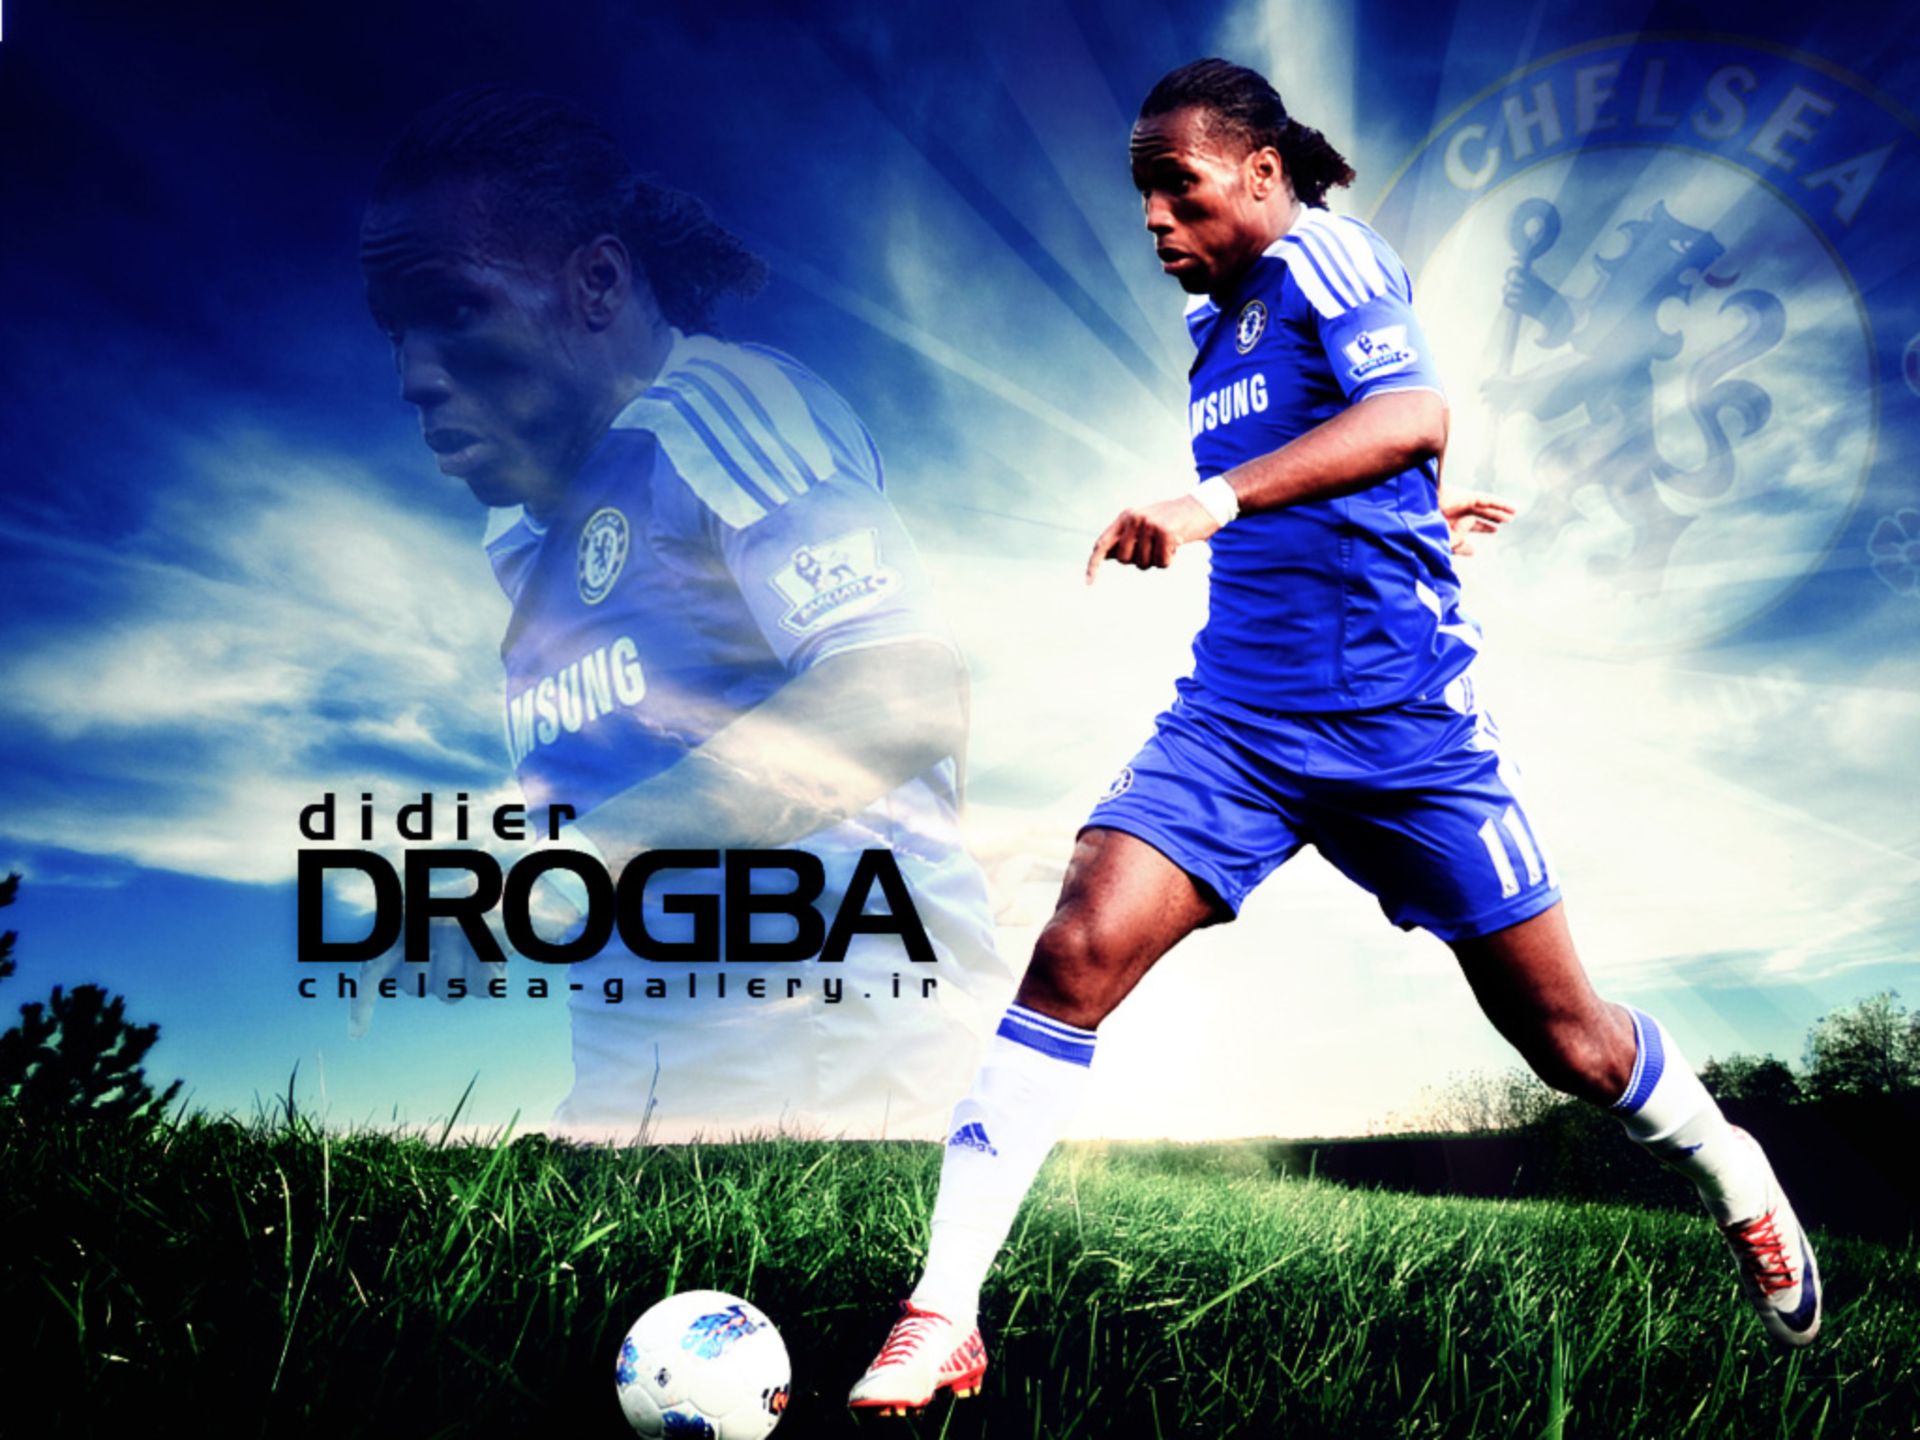 Didier-Drogba-wallpaper-6-1024x768 | shah6023 | Flickr